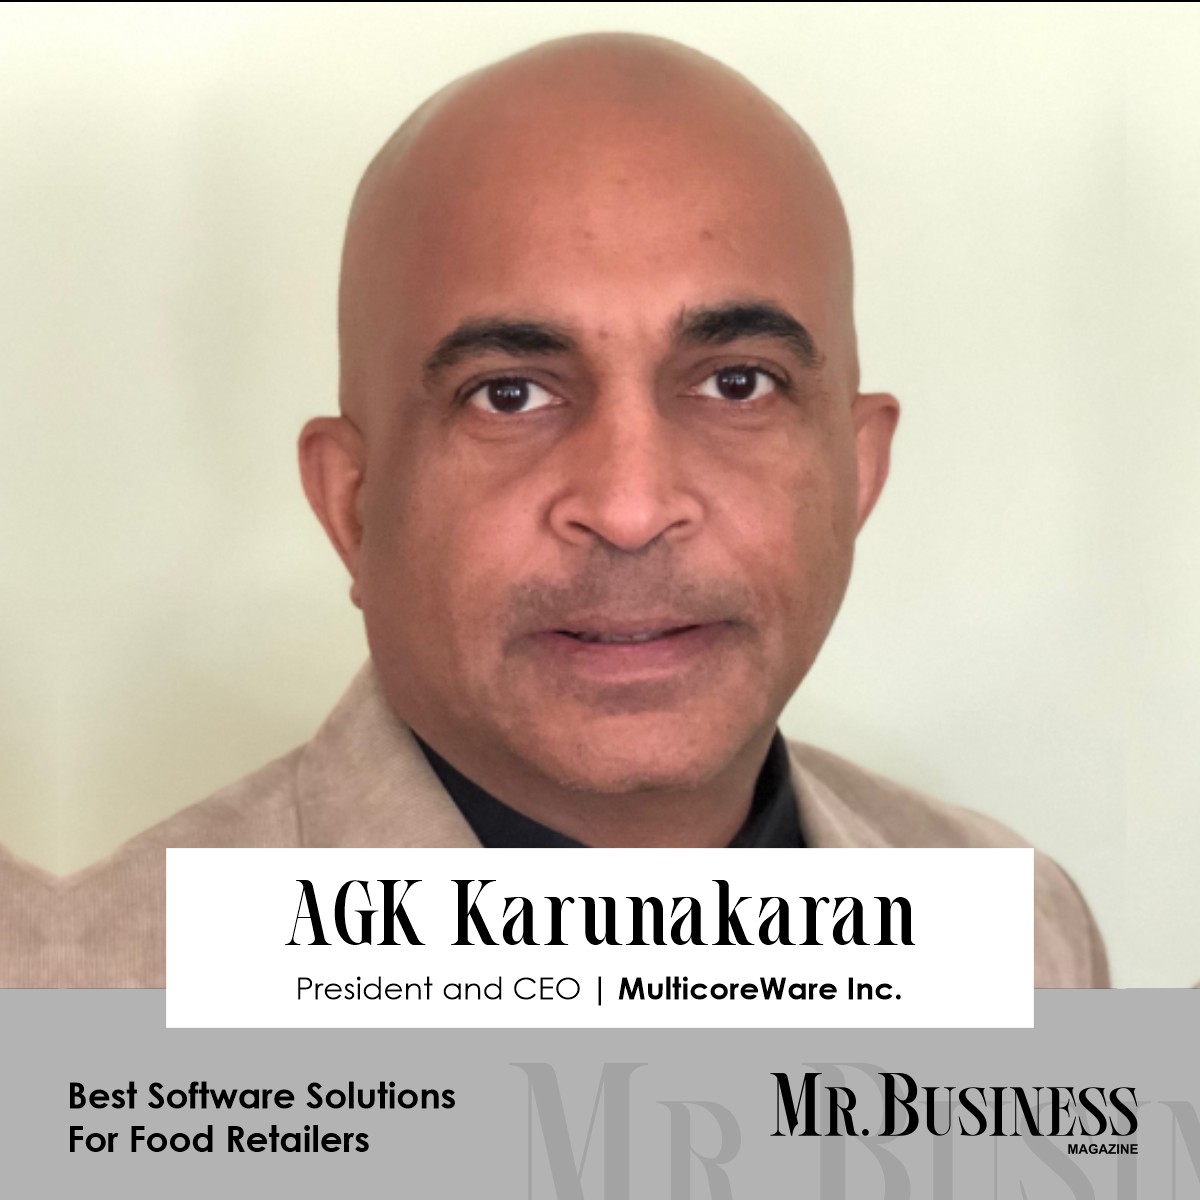 MulticoreWare Inc- Building Responsible AI Solutions | Mr. Business Magazine